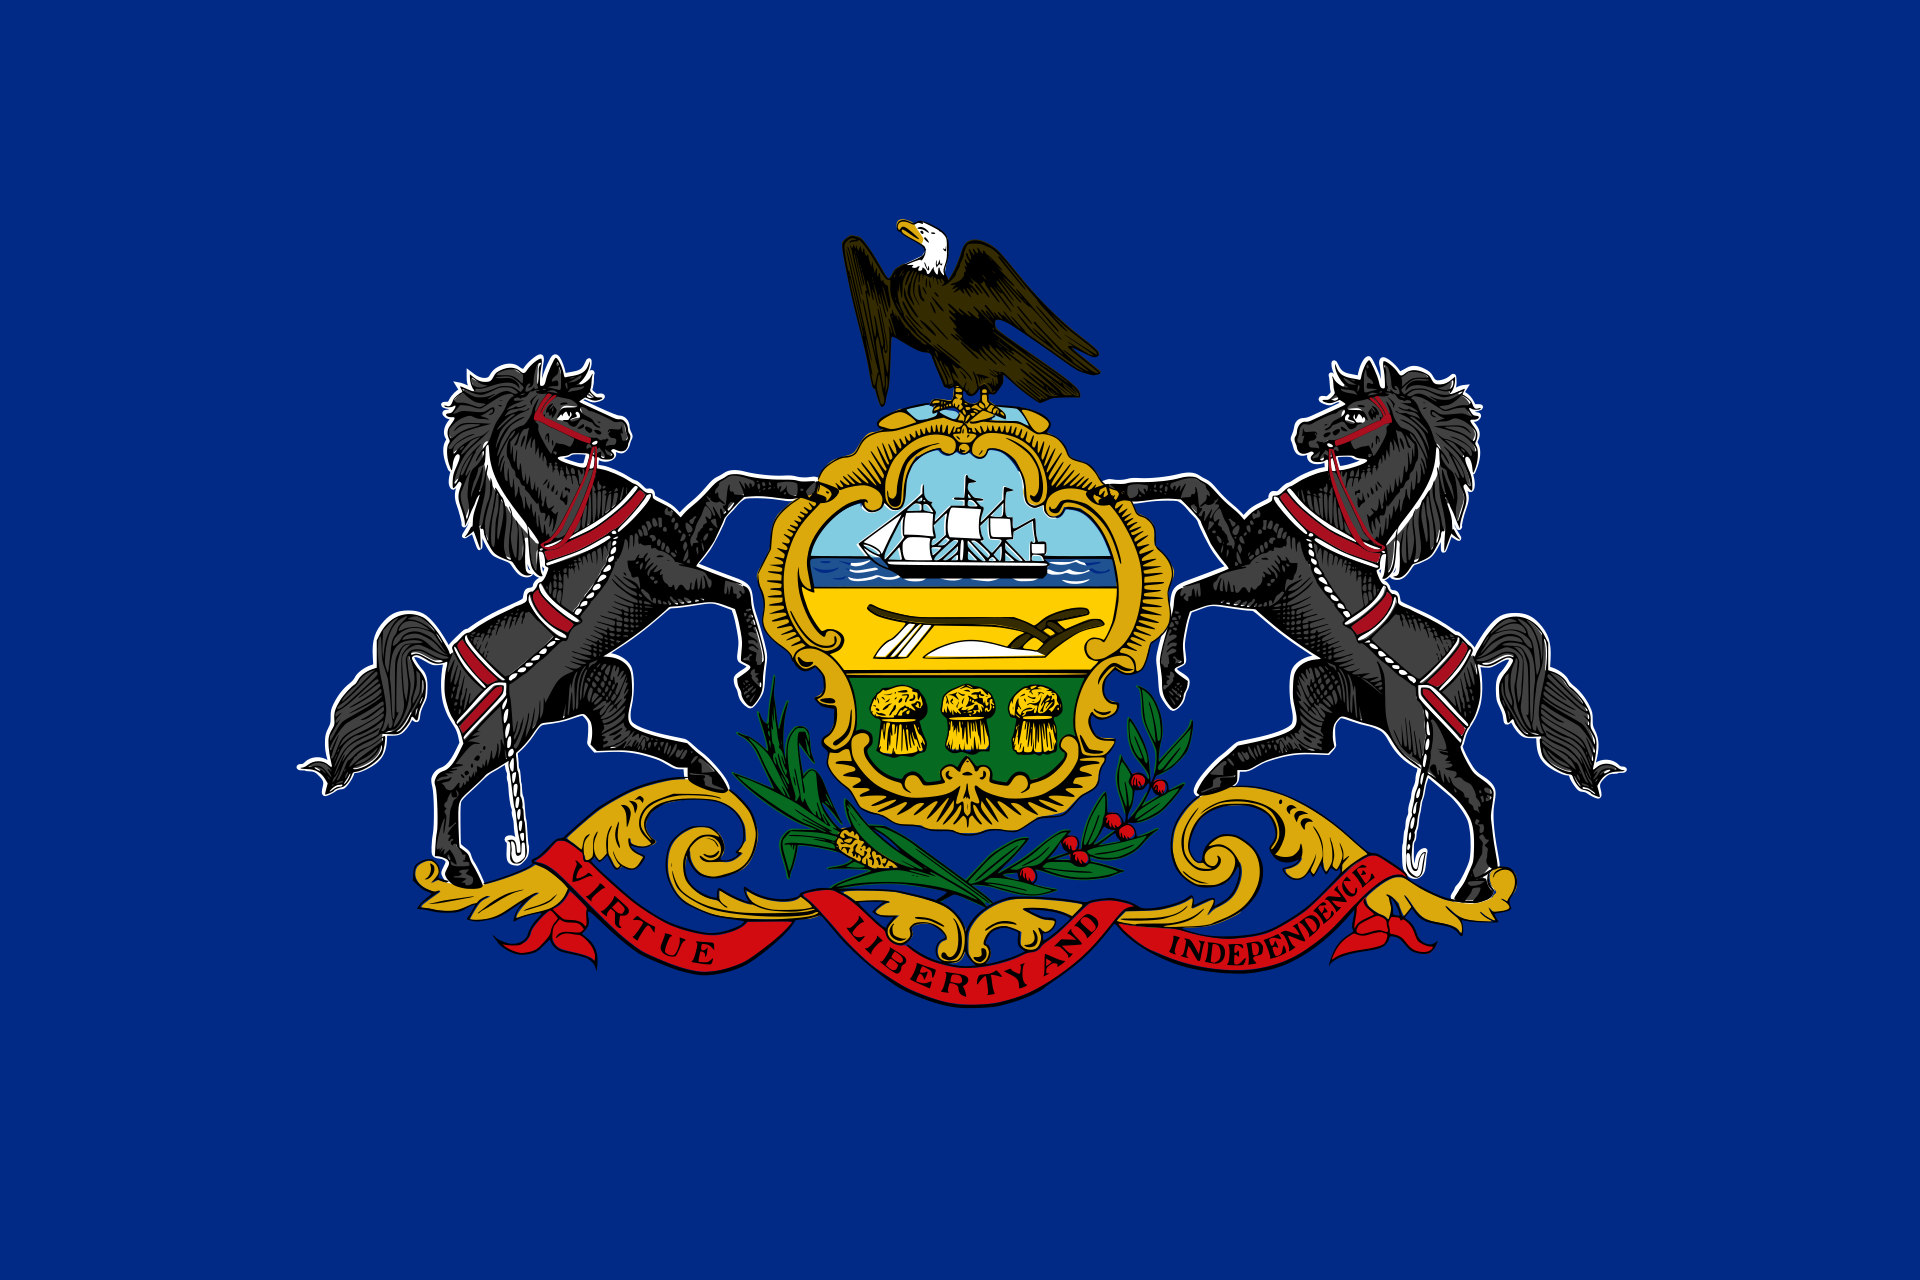 Obrázek vlajky státu USA Pensylvánie, členského státu Spojených států Amerických, v rozlišení v rozlišení 1920x1280 | Pensylvánie | Pensylvánská vlajka | Harrisburg | Philadelphia